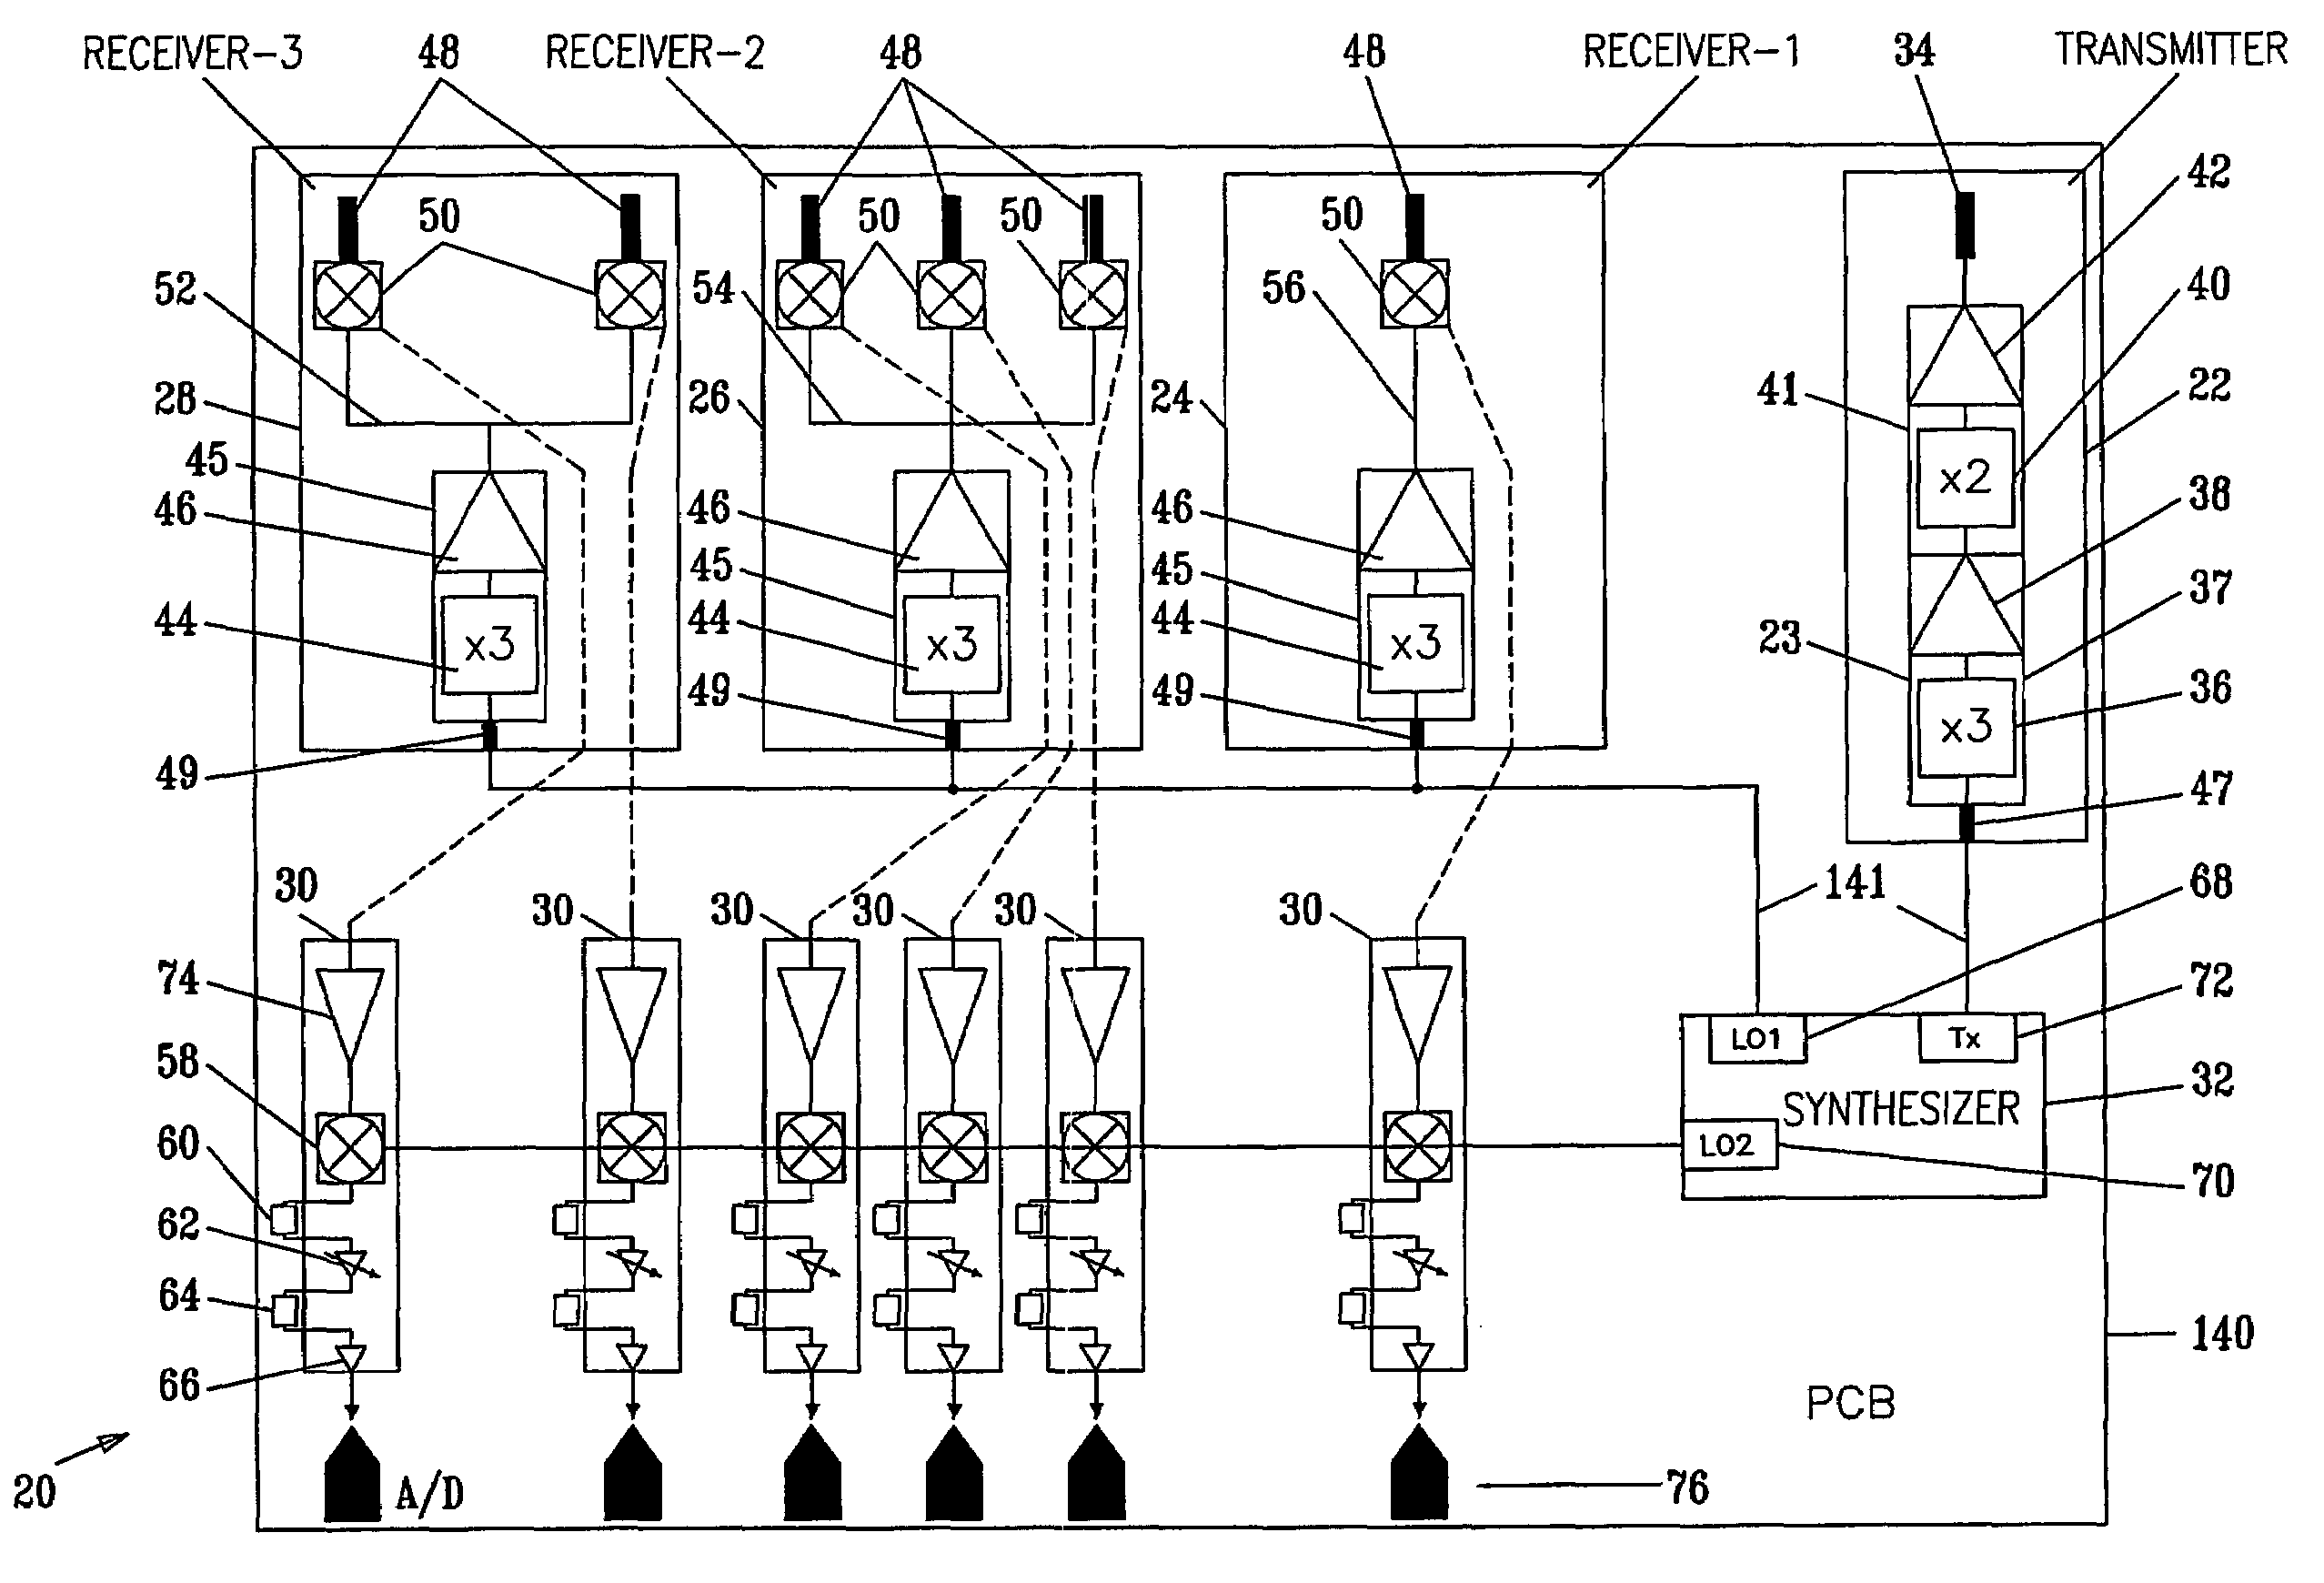 Rf system concept for vehicular radar having several beams